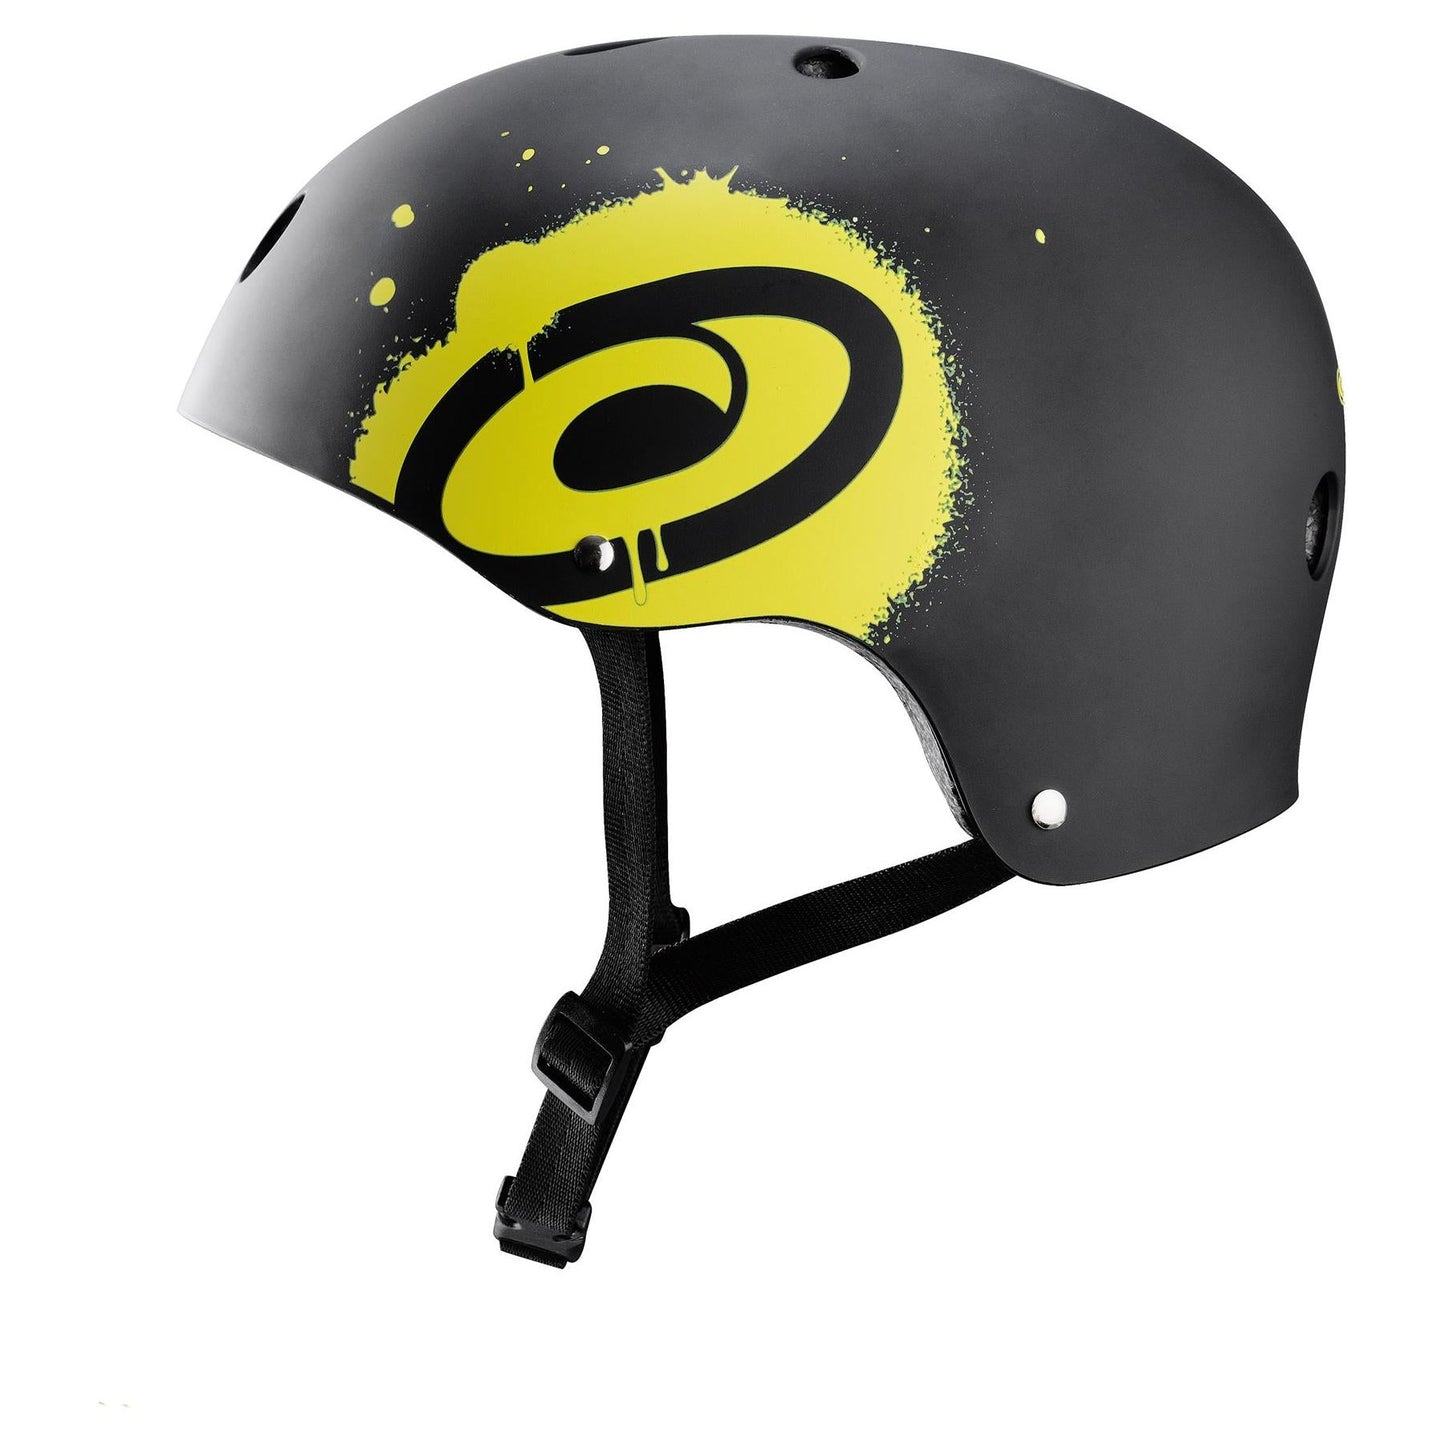 Osprey Skate Helmet Small